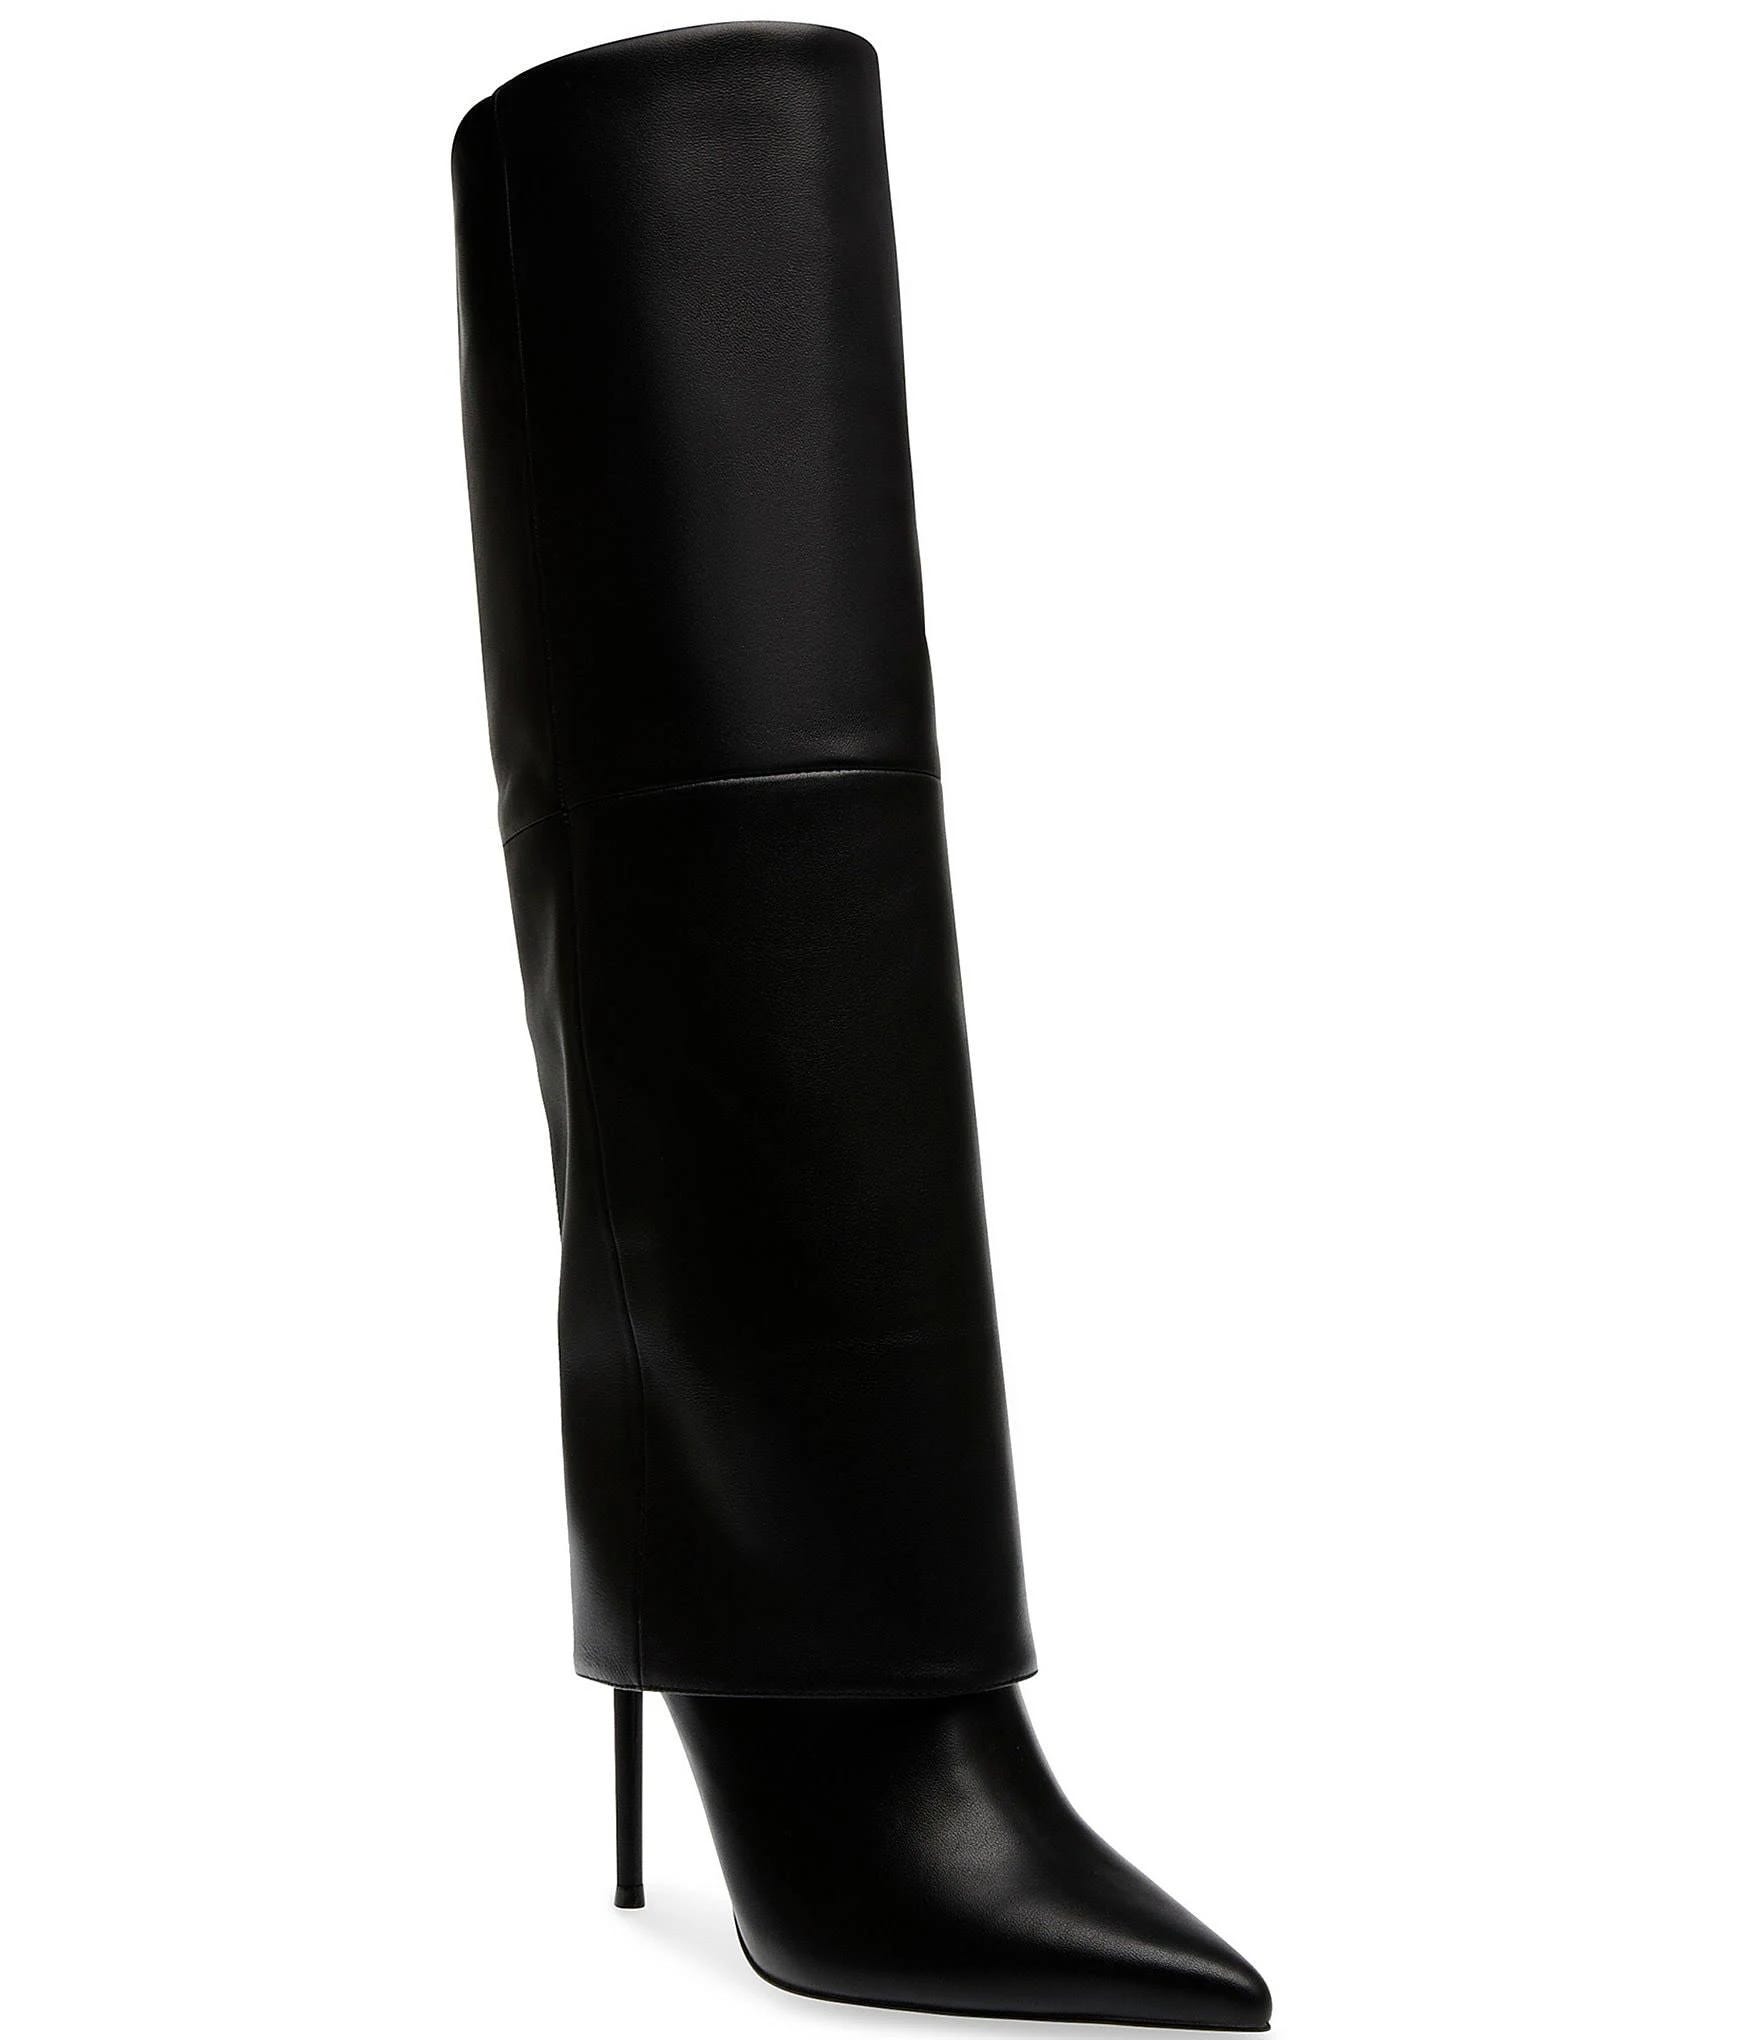 Sleek Steve Madden Black Knee High Boots with 4-inch Stiletto Heel | Image